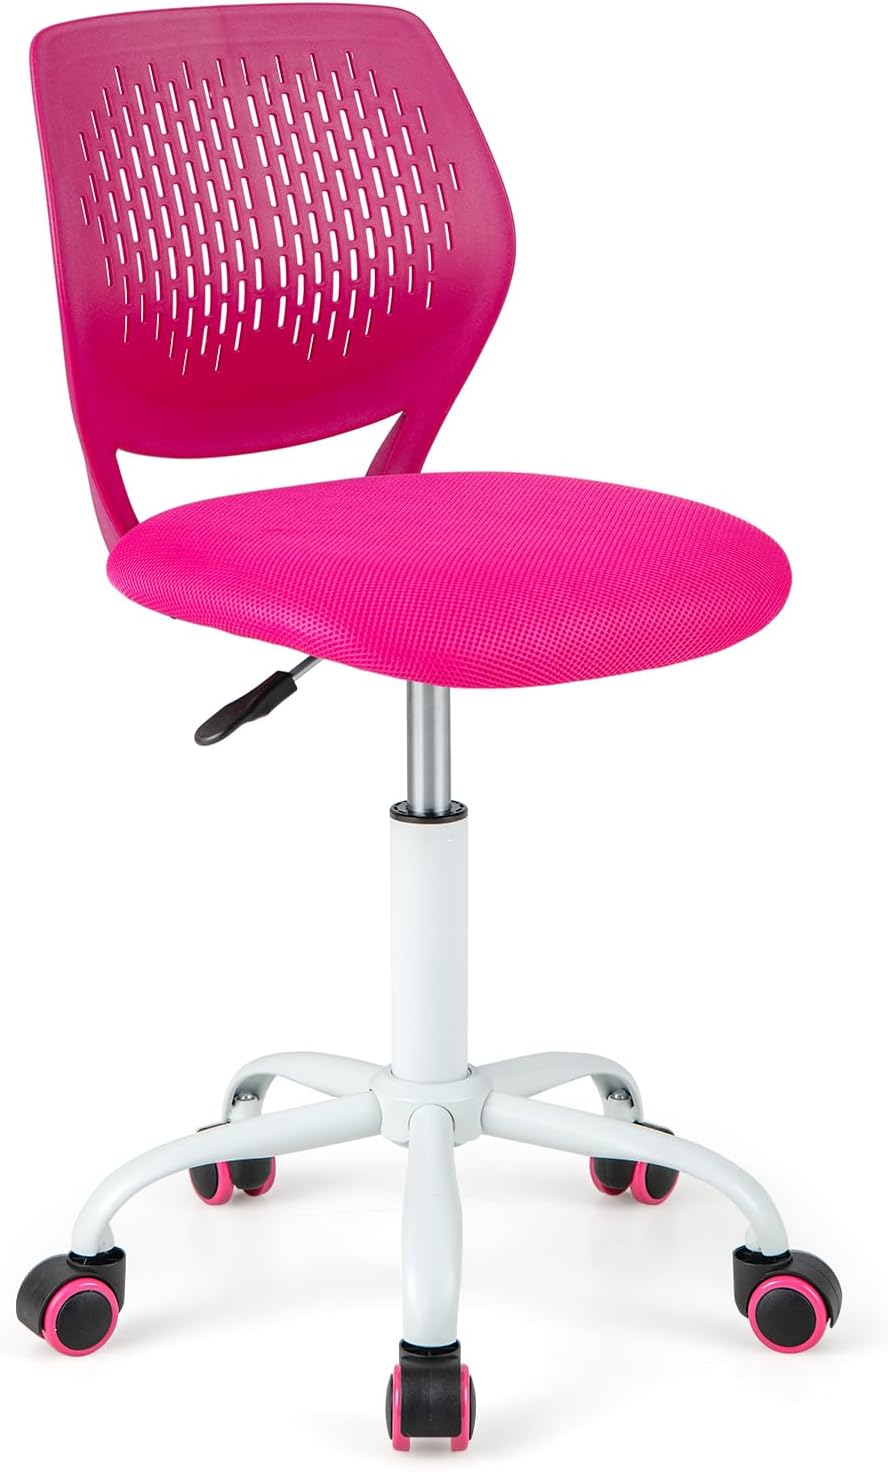 Giantex Kids Desk Chair, Children Armless Study Chair with Adjustable Height, for Girls Boys Teens